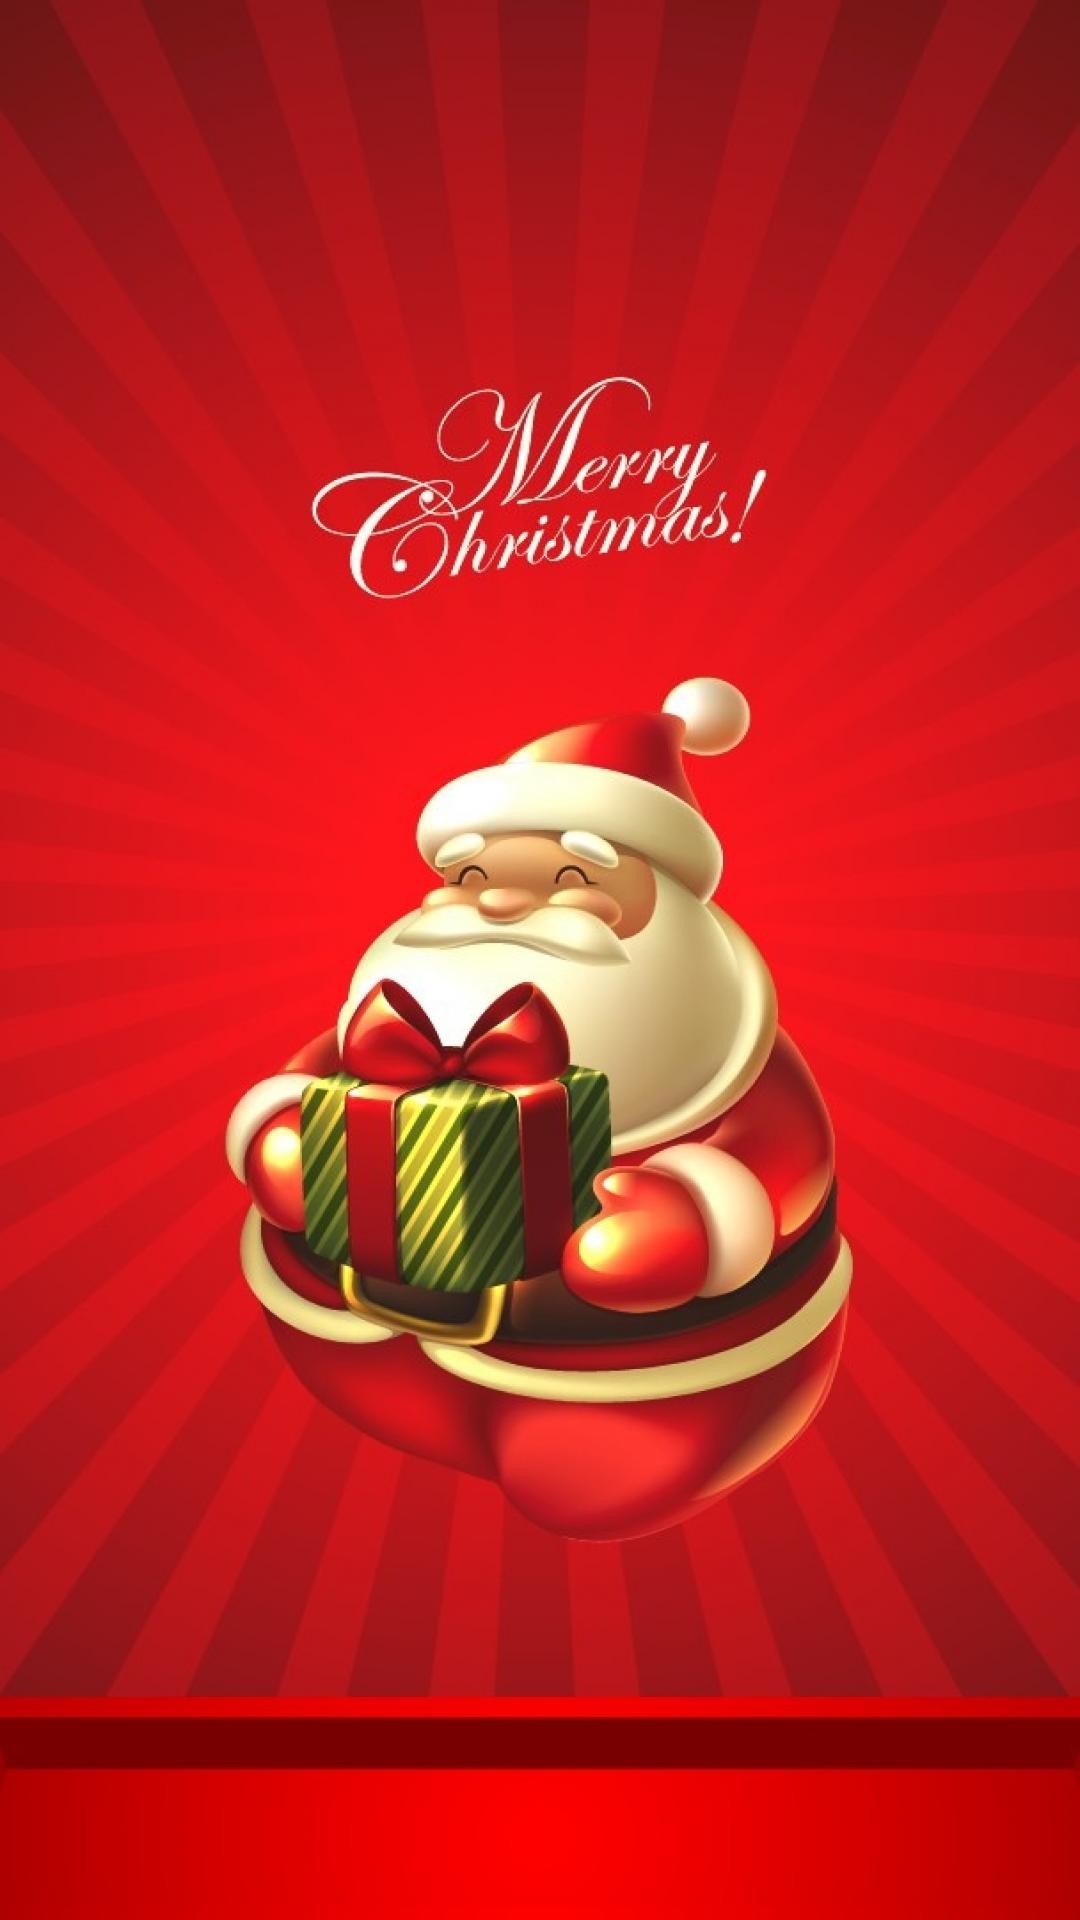 1080x1920 Cute Christmas Santa Claus iPhone 8 wallpaper